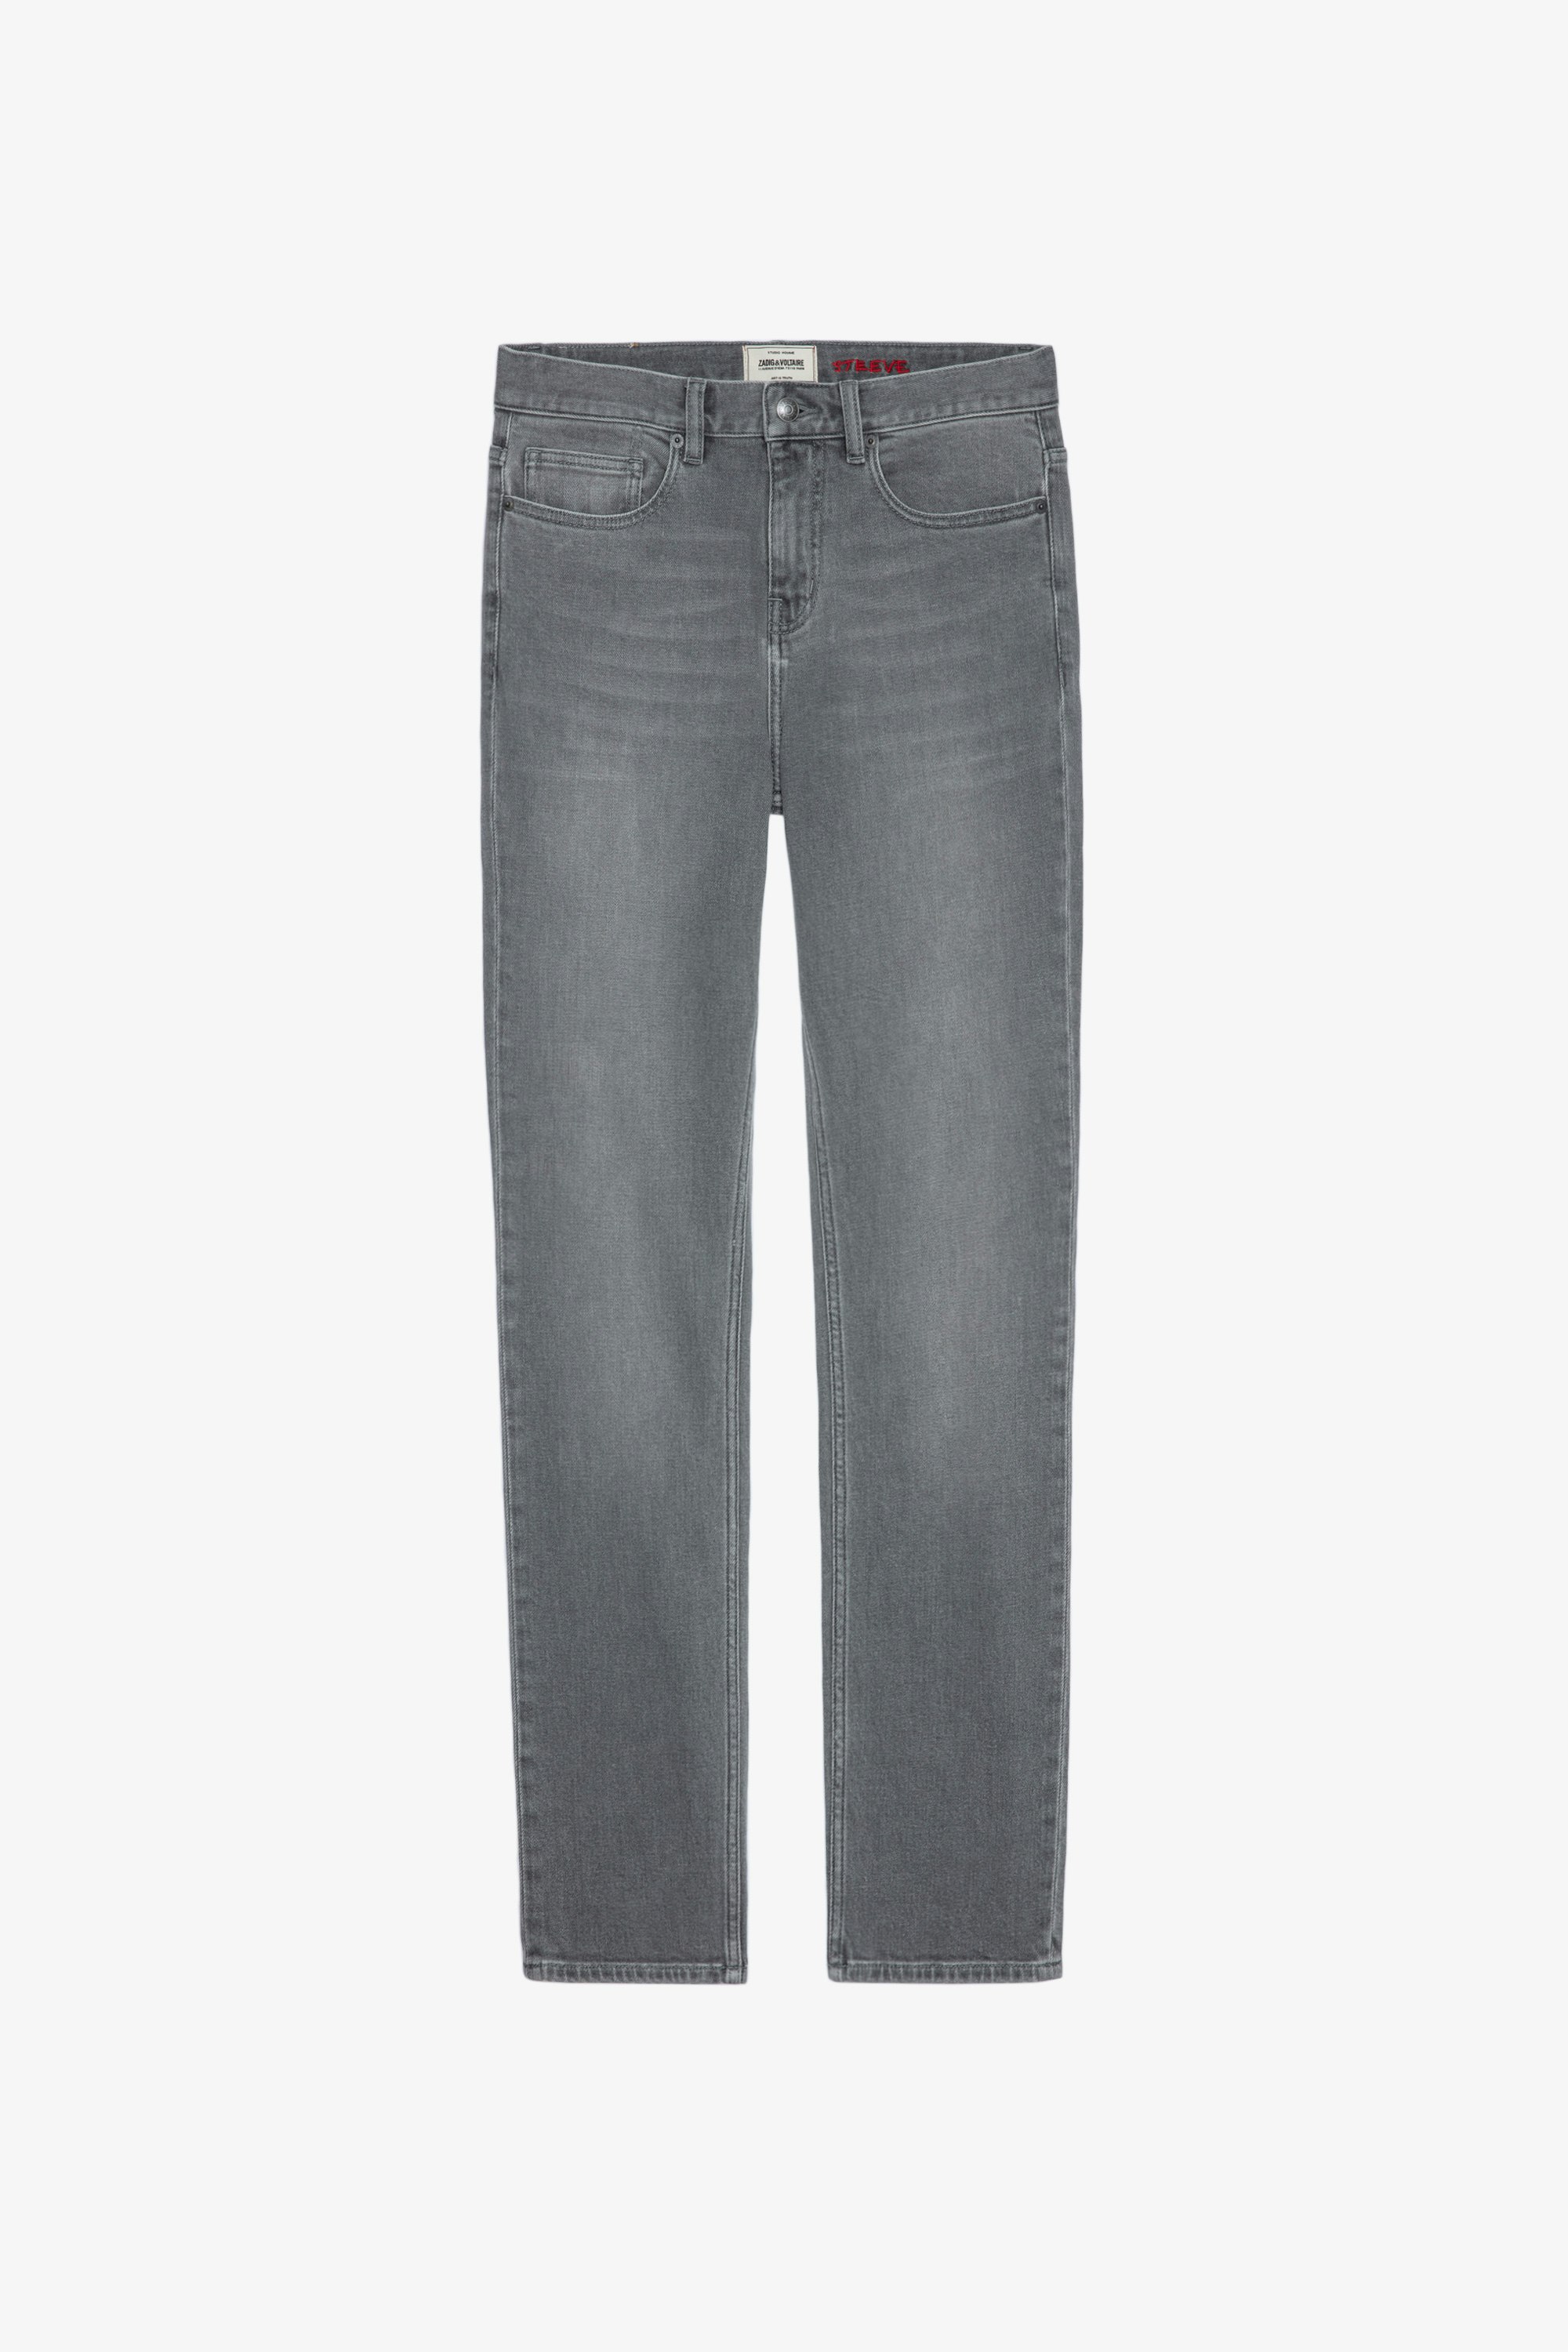 Steeve Jeans  Men’s regular-fit grey denim jeans